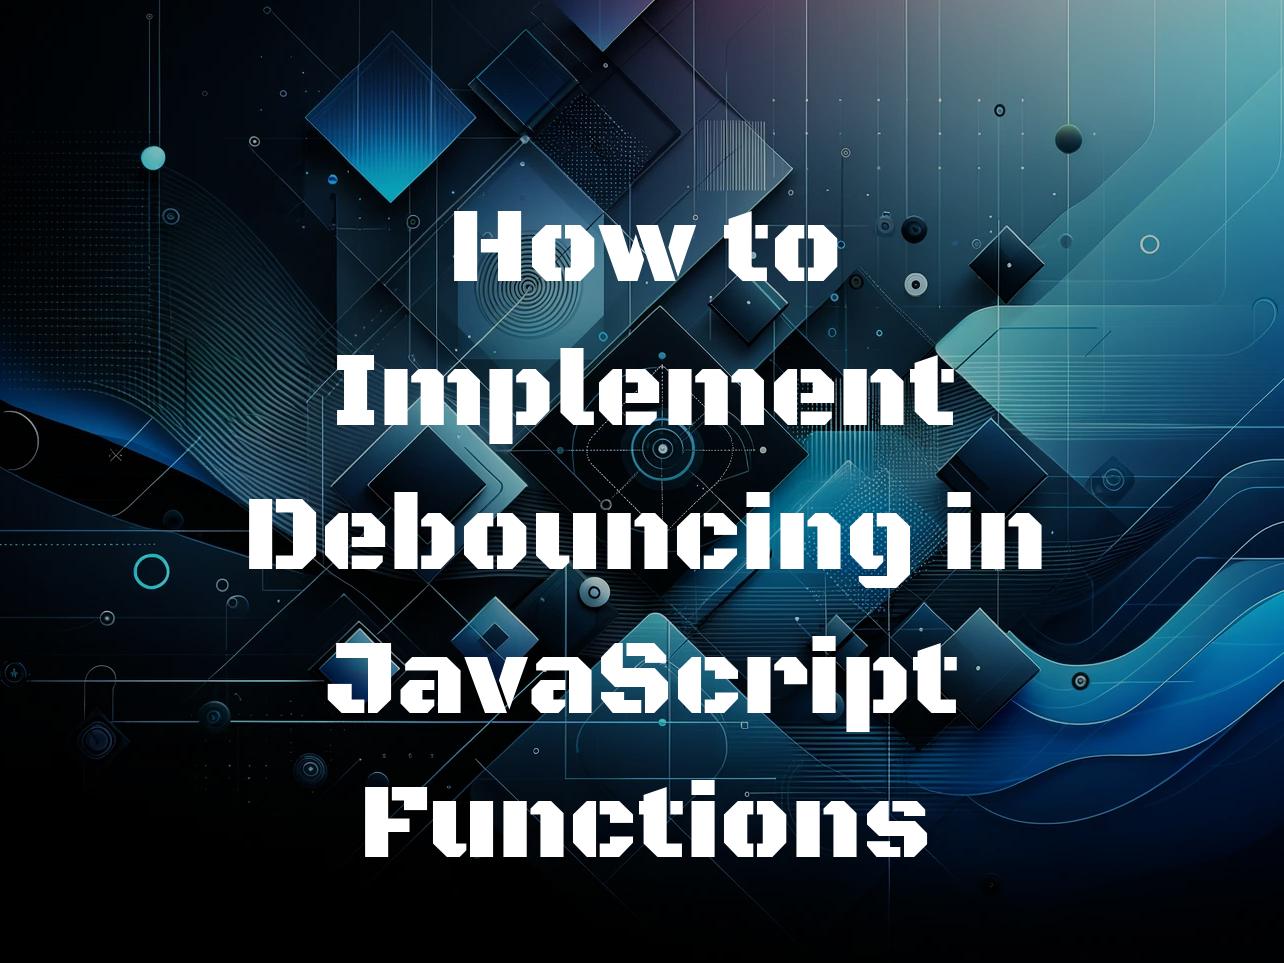 How to Implement Debouncing in JavaScript Functions